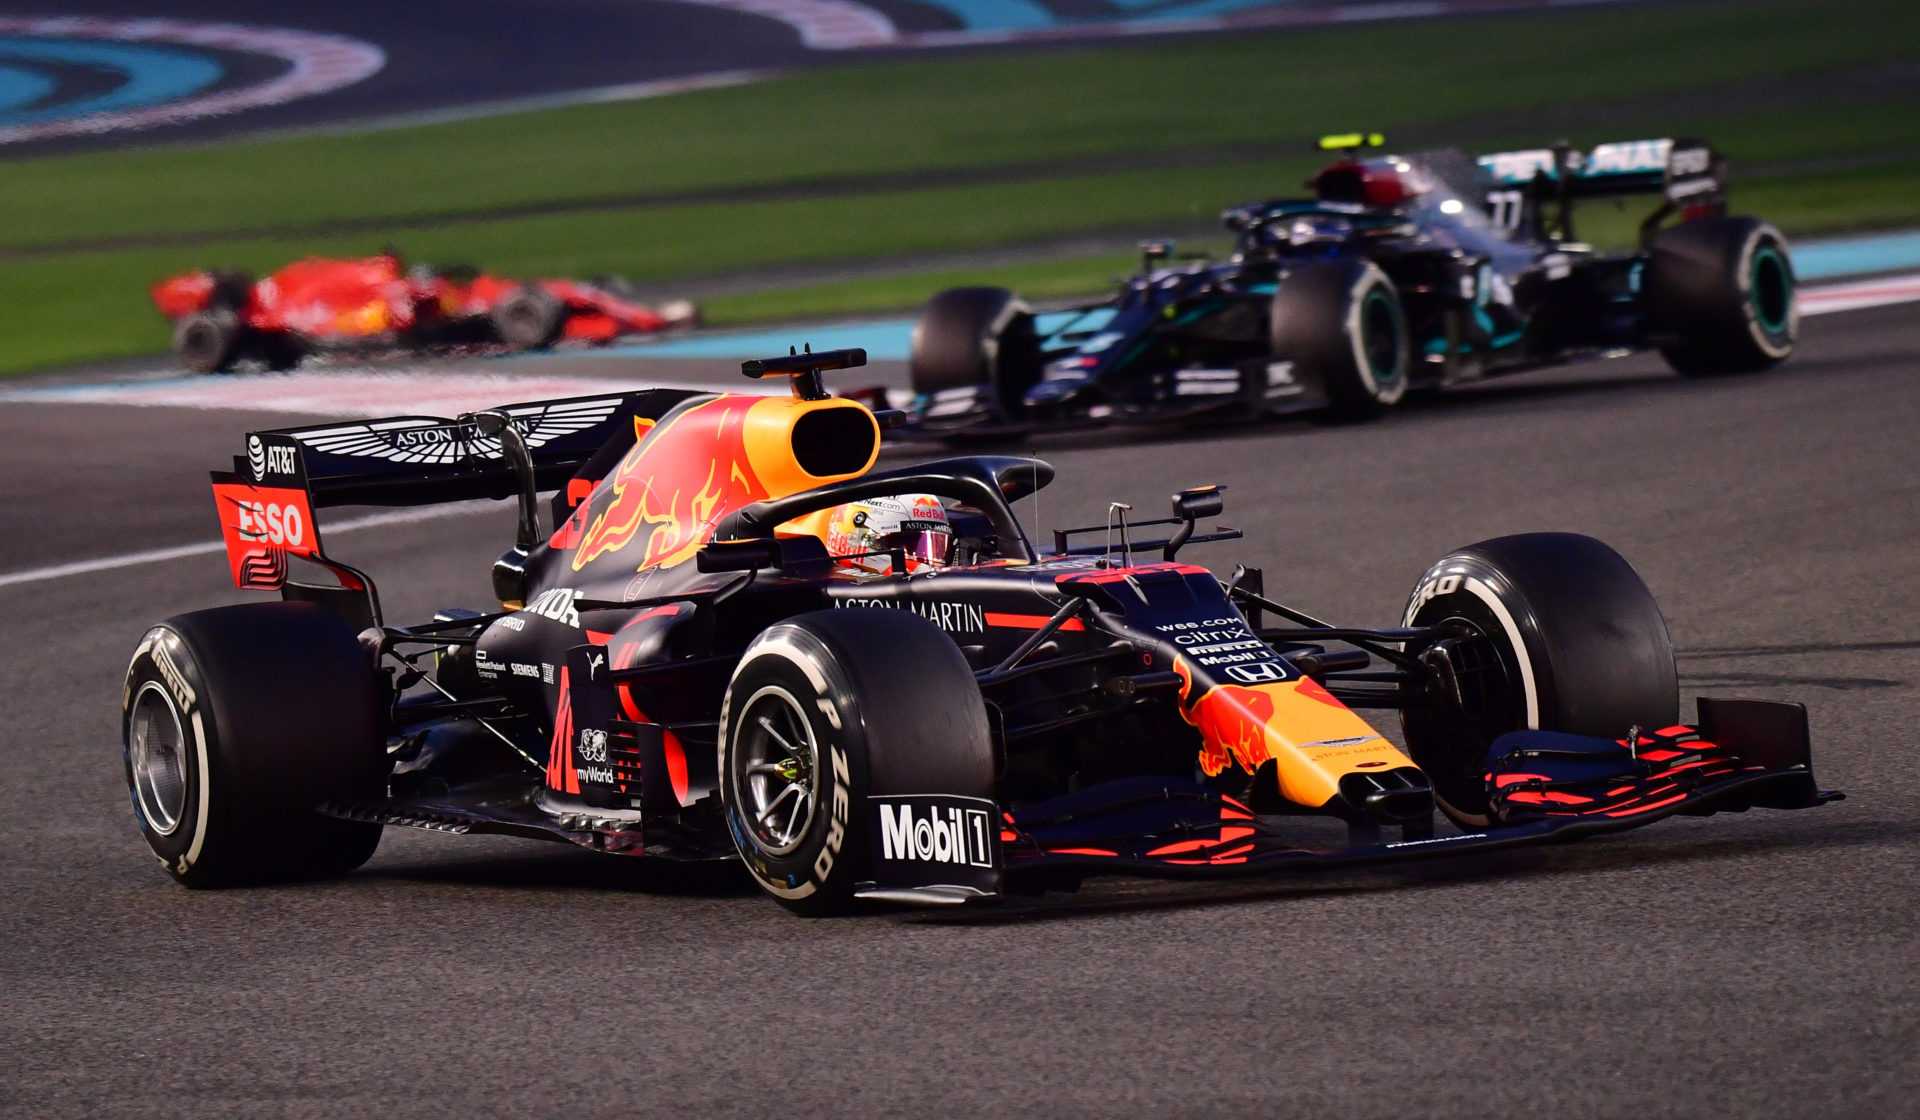 Le pilote Red Bull Max Verstappen en tête du peloton lors du GP F1 d'Abu Dhabi 2020